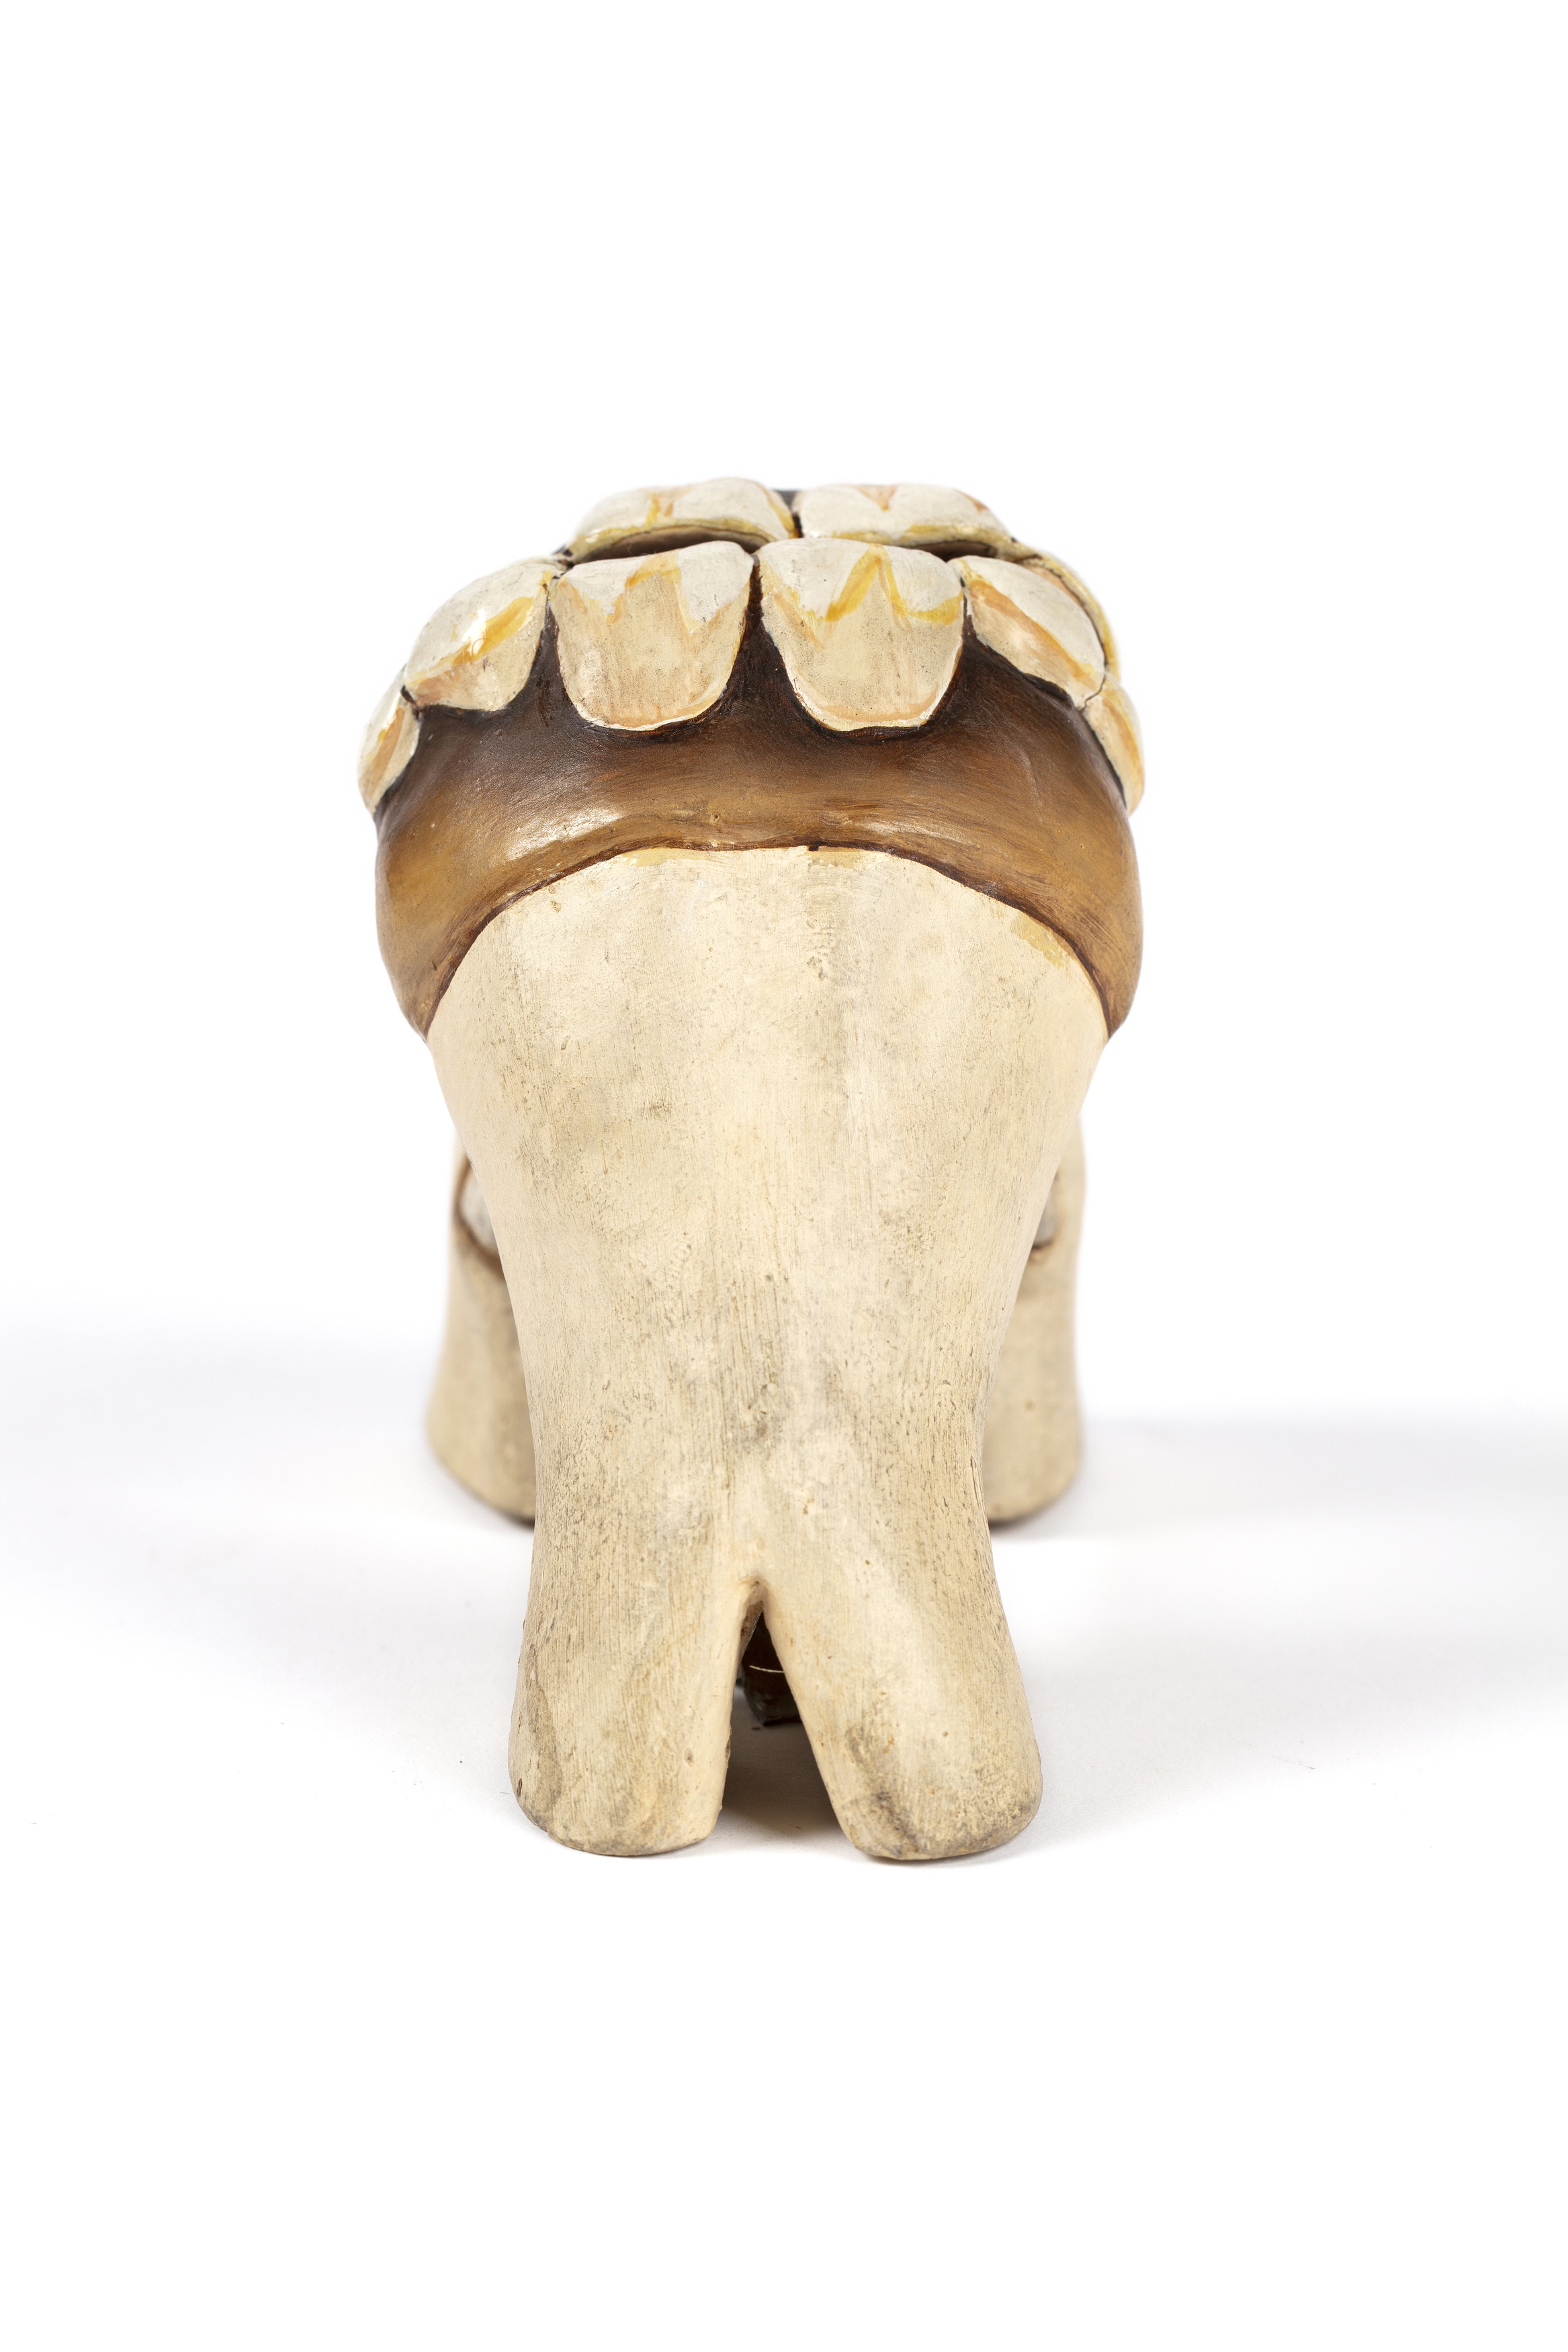 Cast of horse teeth set